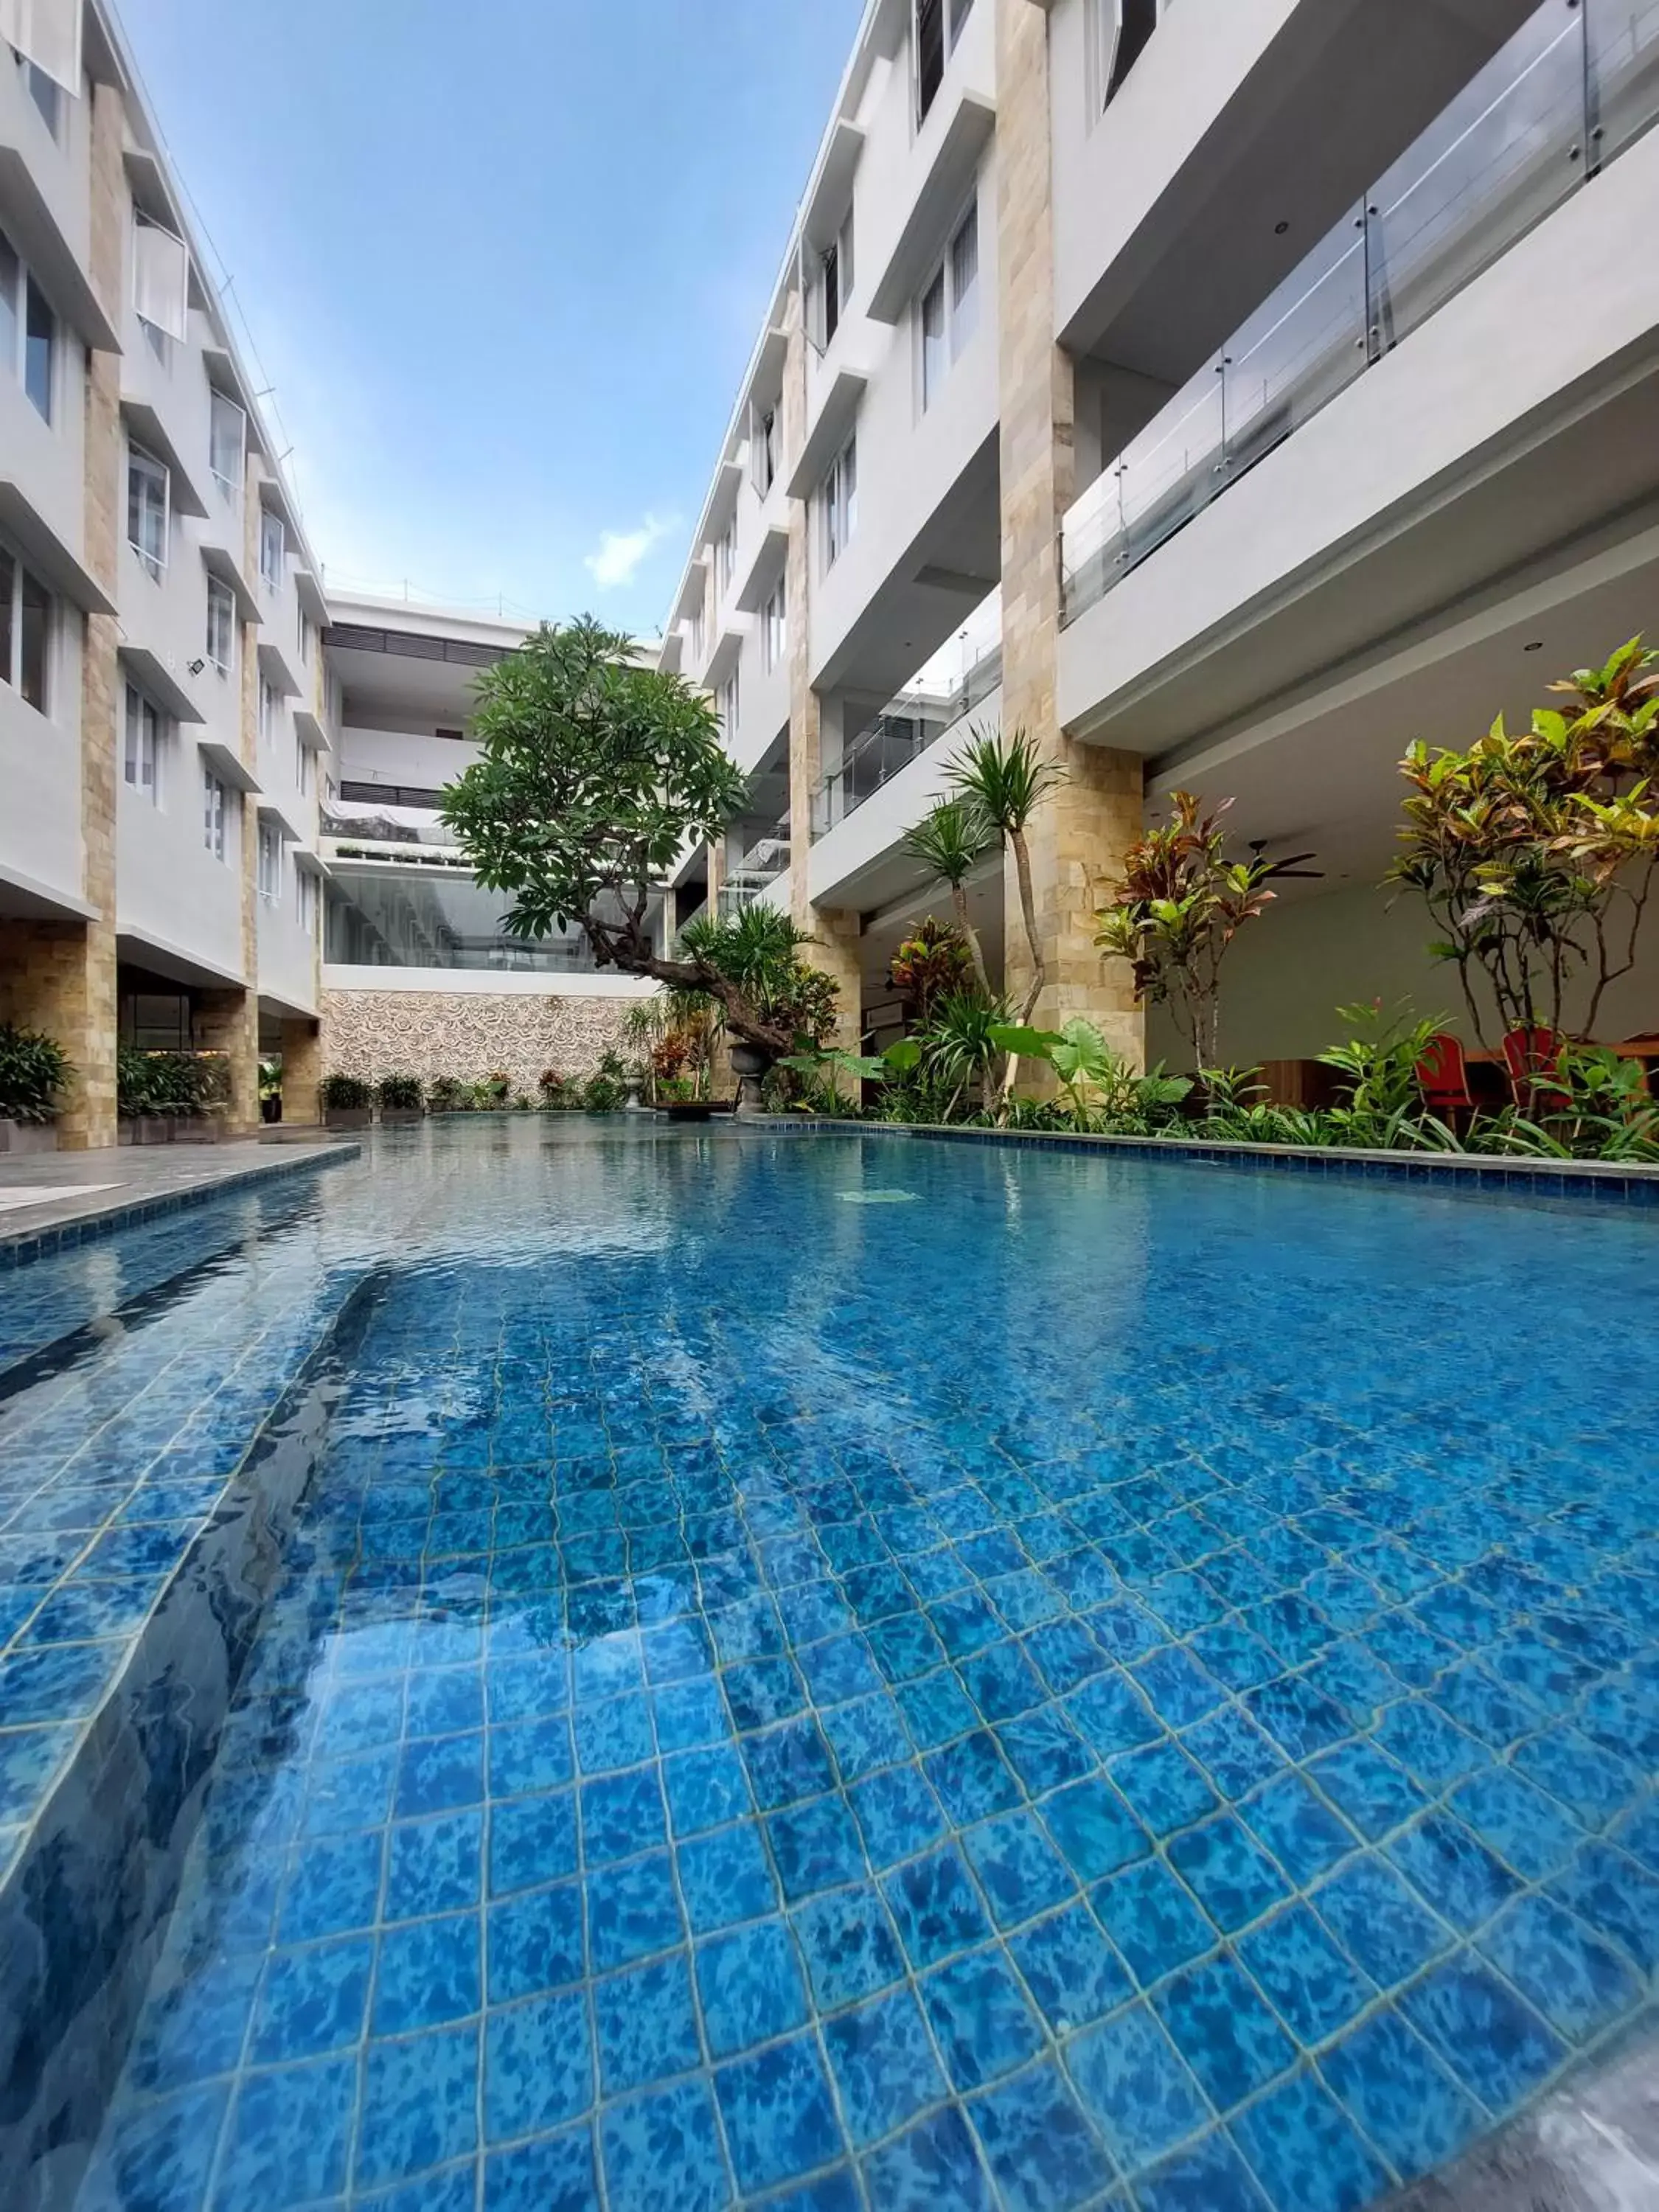 Swimming Pool in Crystalkuta Hotel - Bali